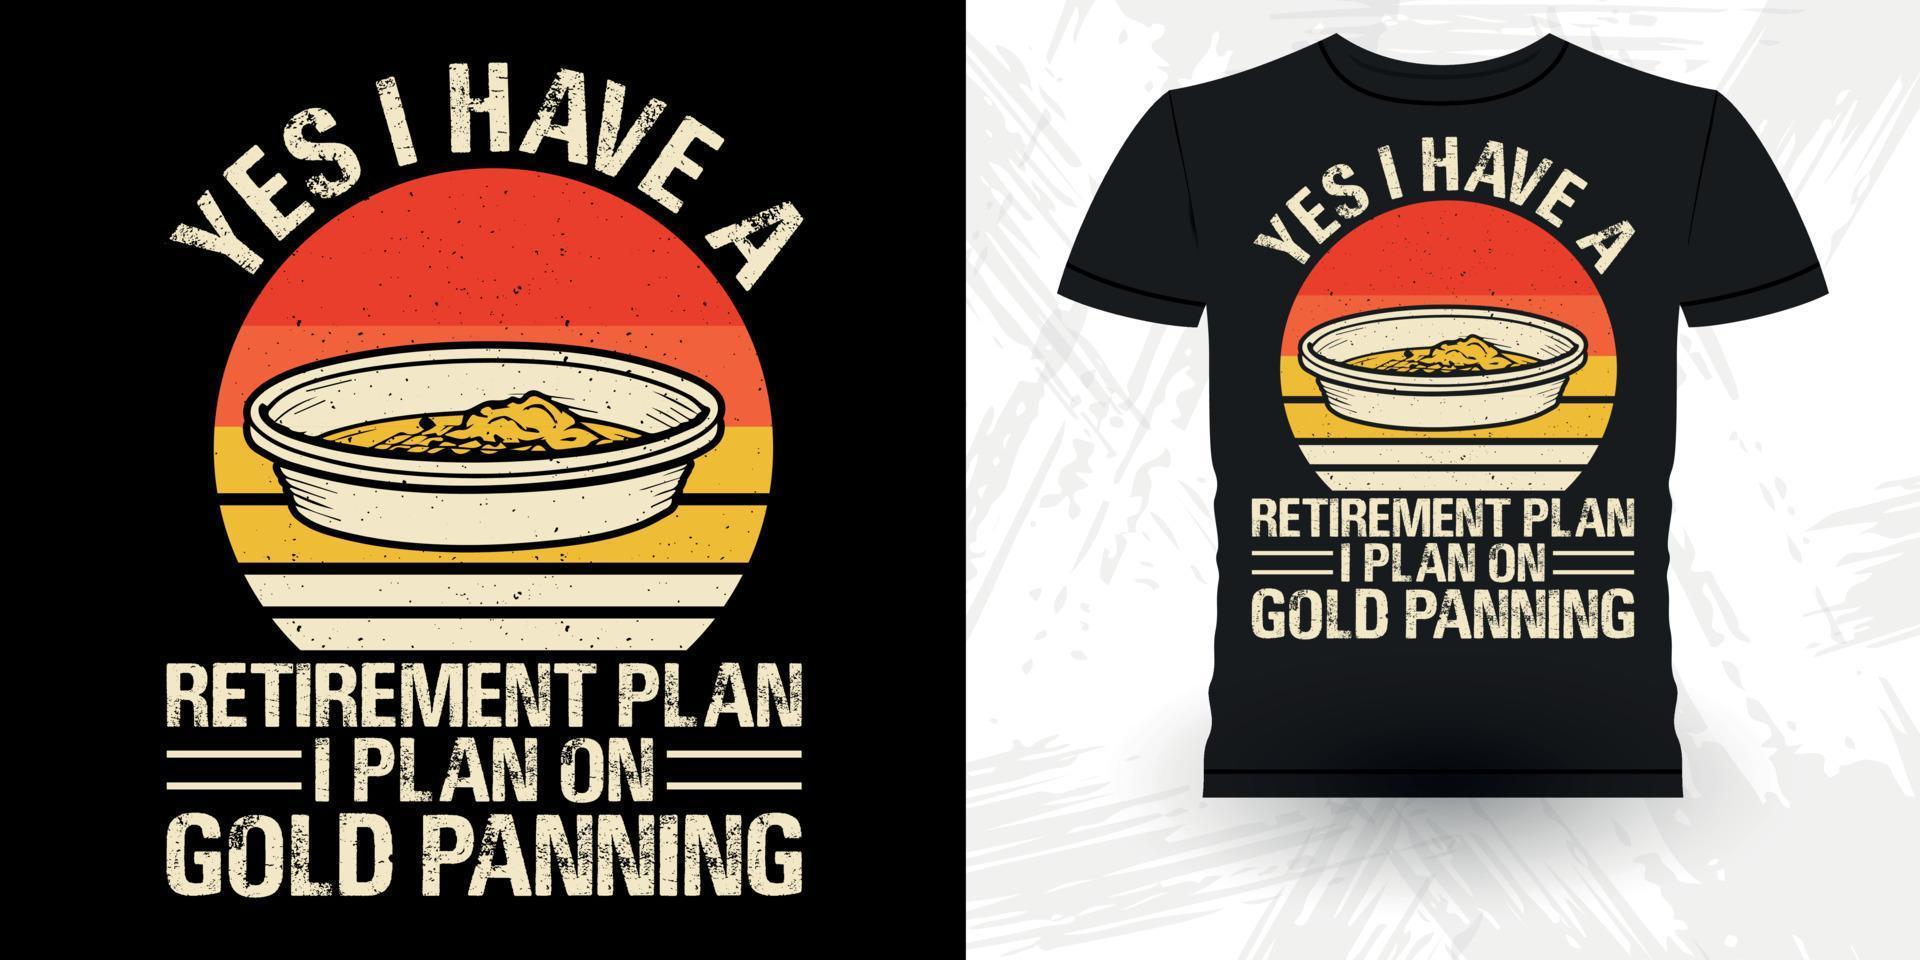 Yes I Have A Retirement Plan I plan On Gold Panning Funny Gold Digging Vintage Gold Panning Retro Vintage T-shirt Design vector